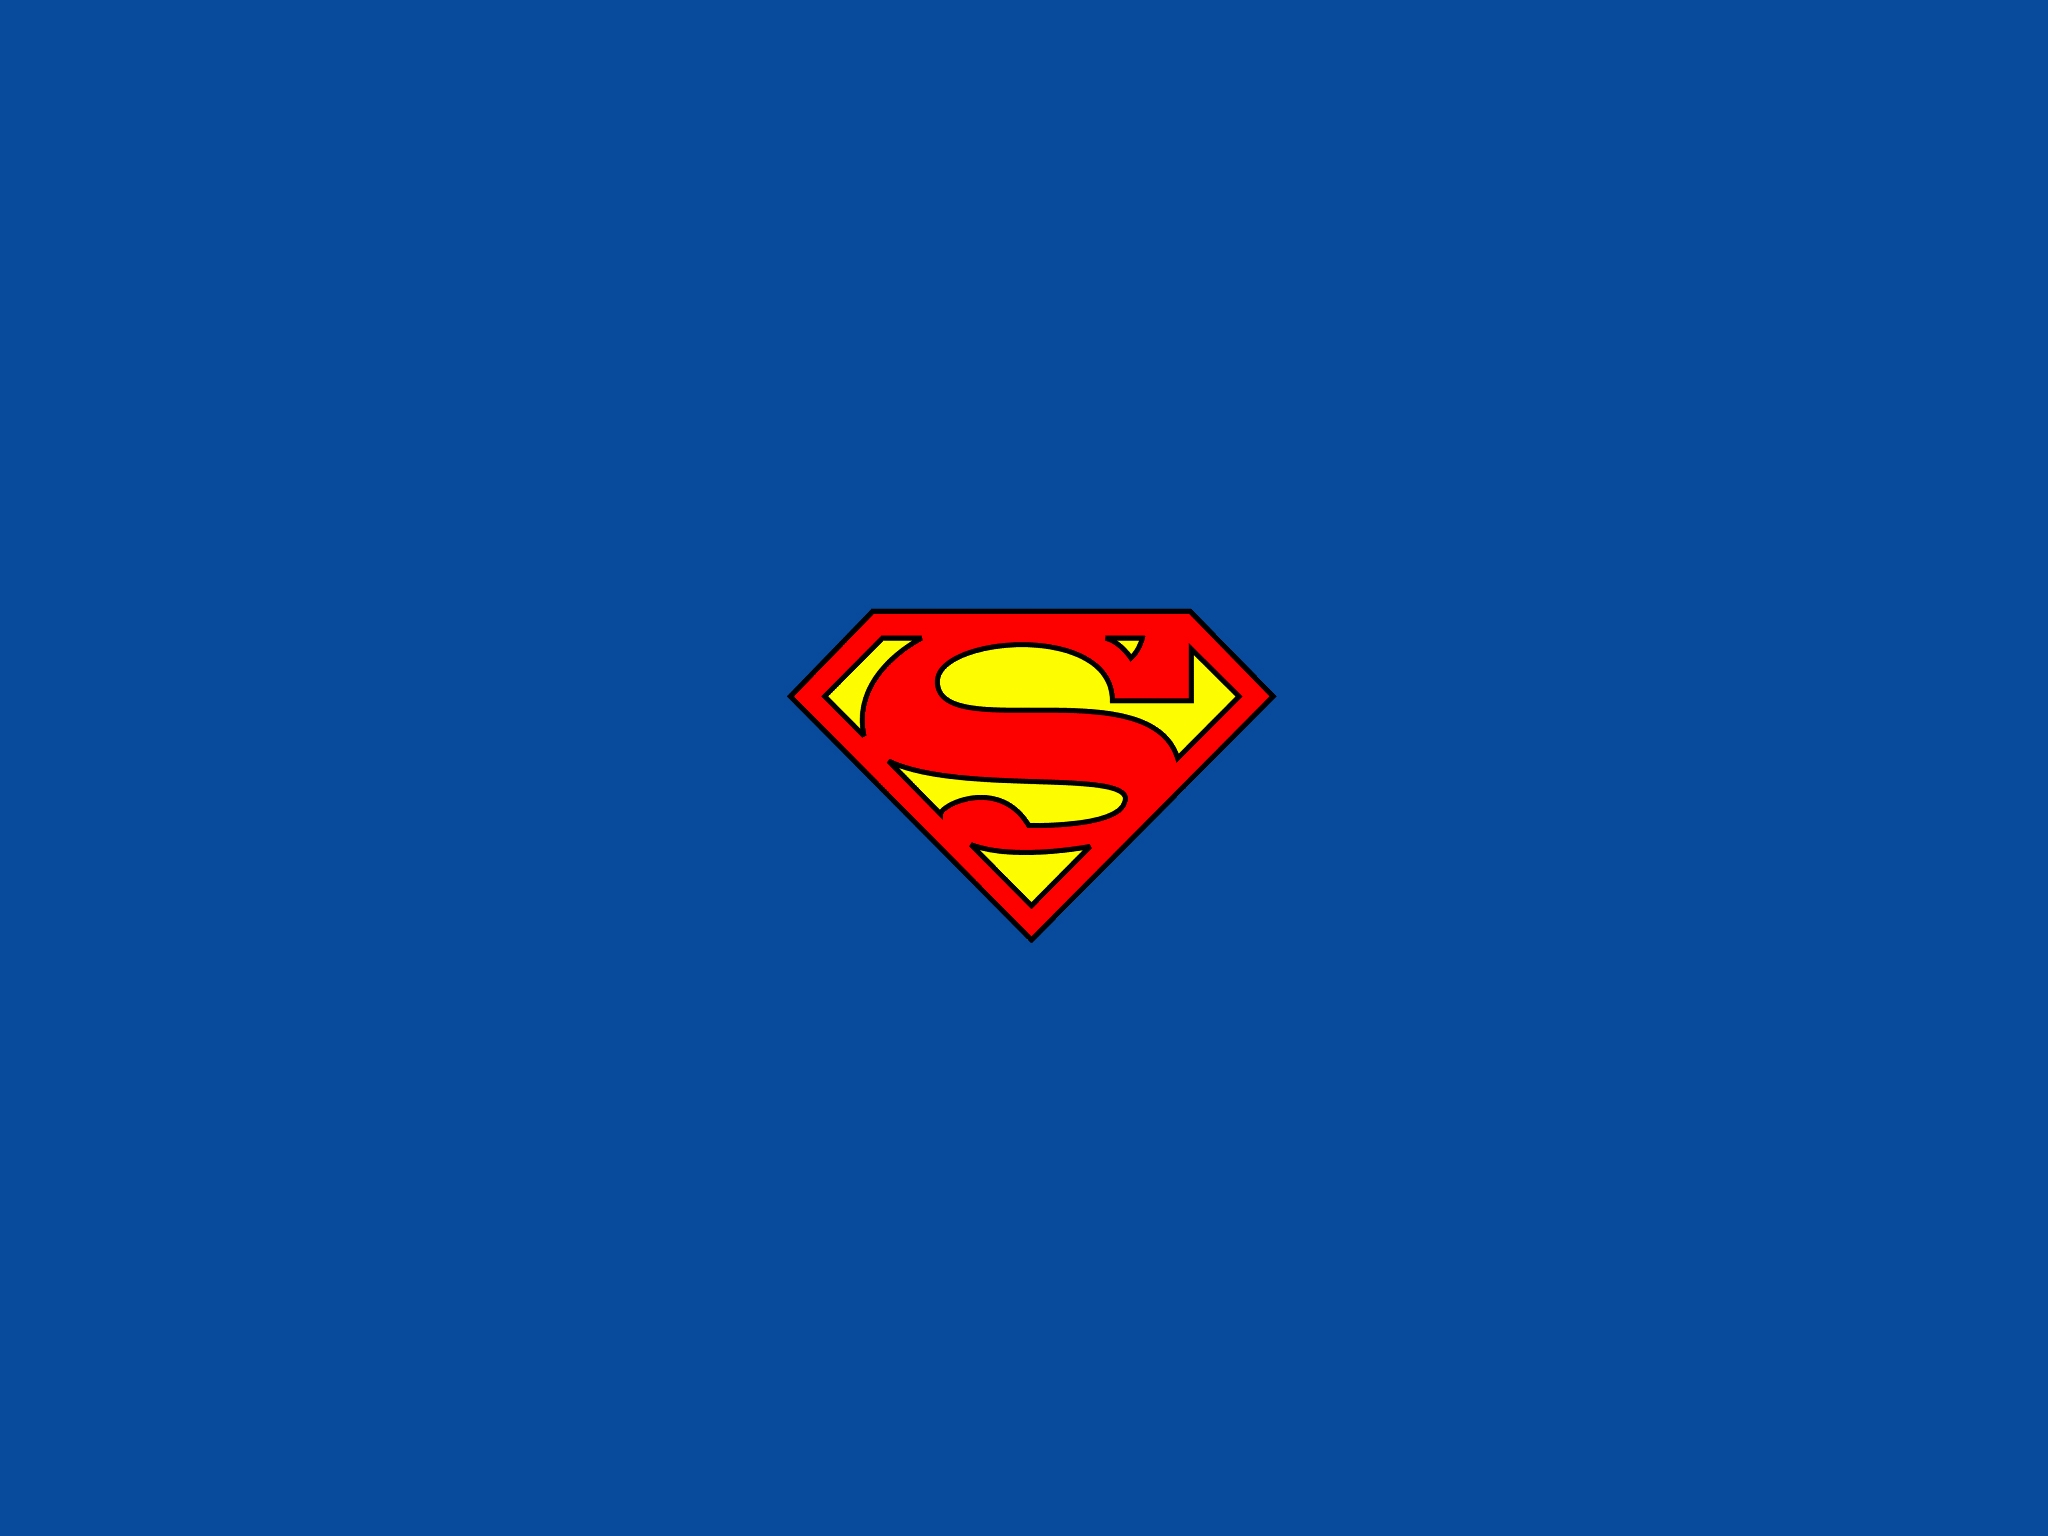 Superman-Logo-Wallpaper-For-iPad | Flickr - Photo Sharing!